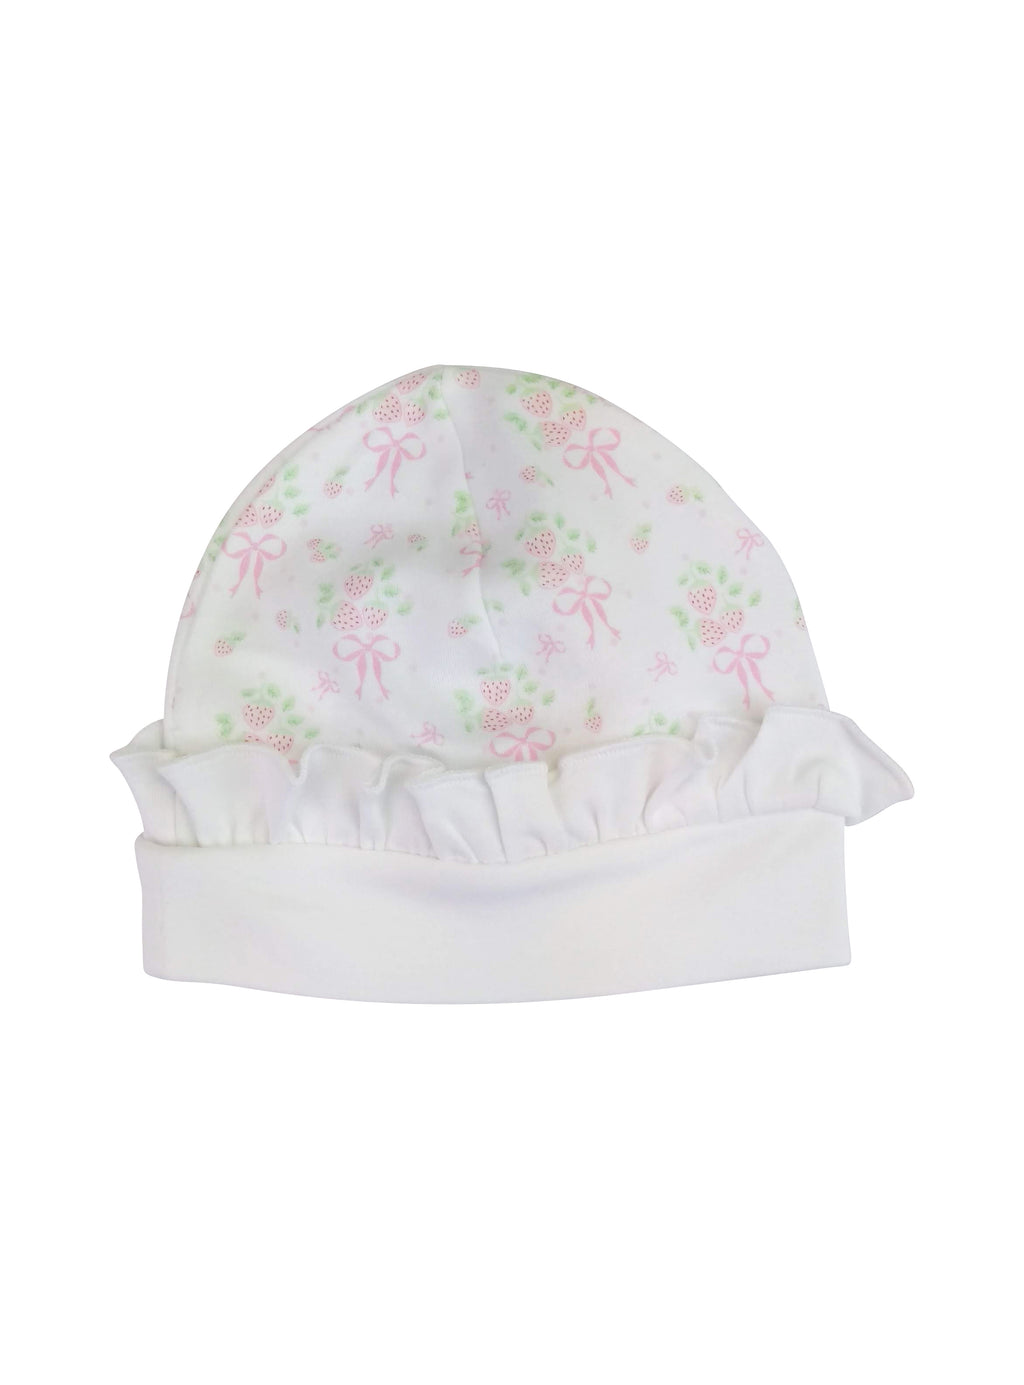 Strawberry print baby hat - Little Threads Inc. Children's Clothing